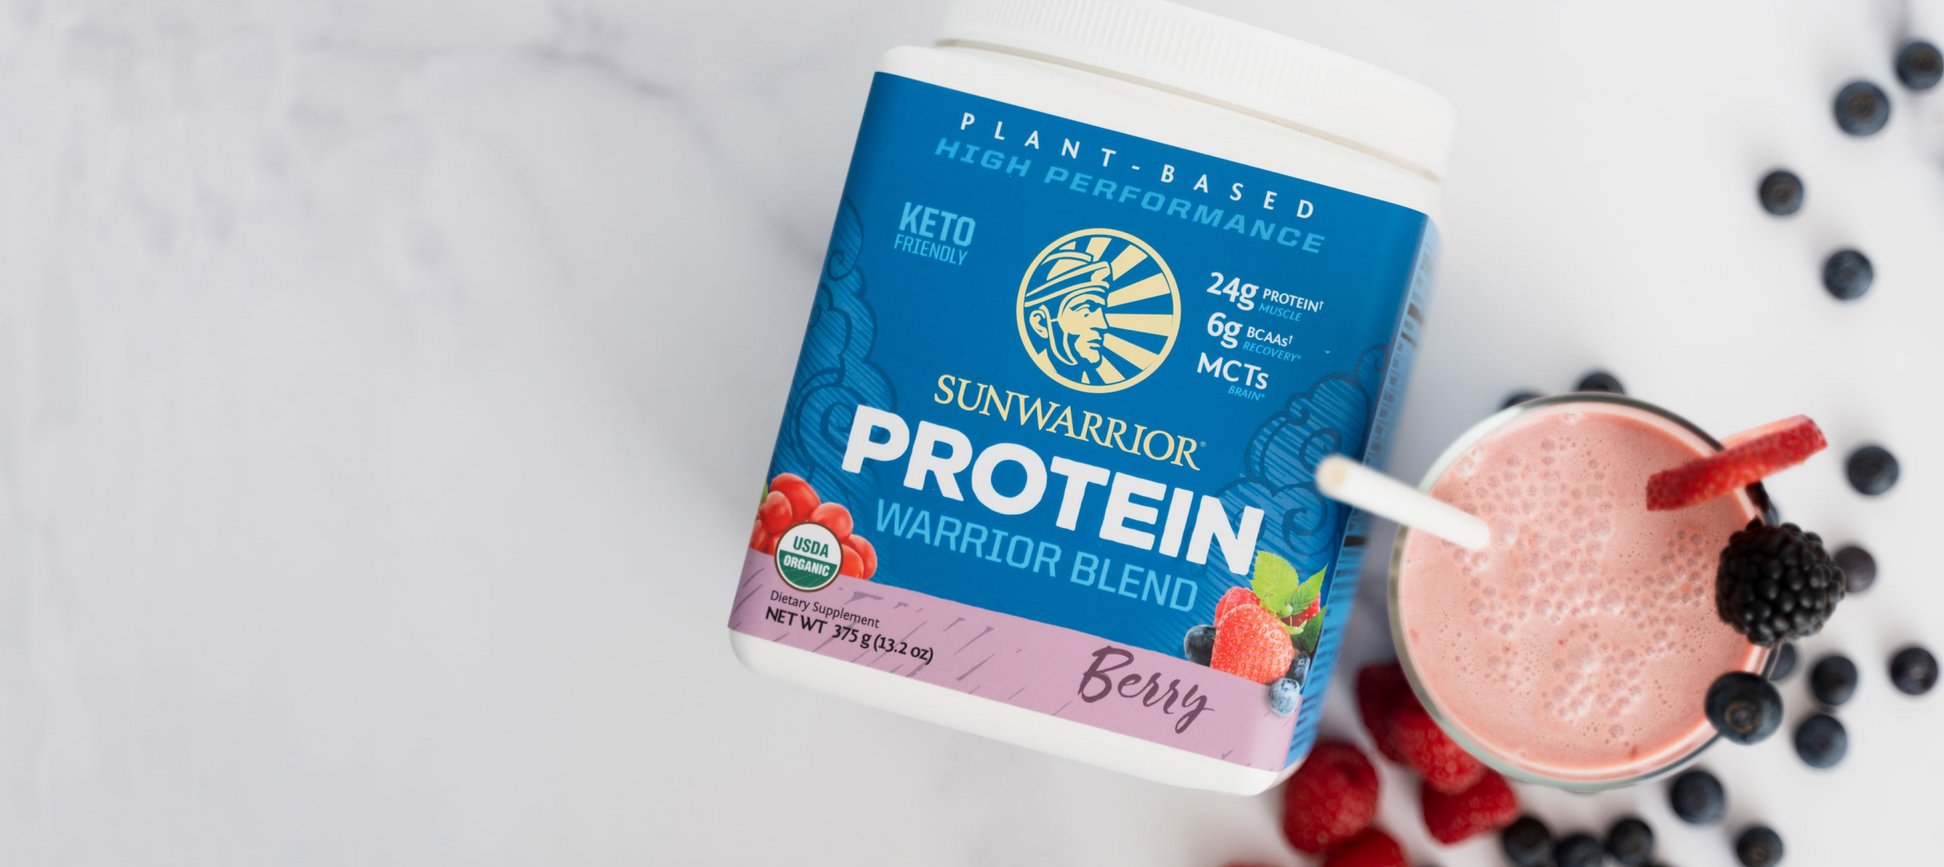 Bote de proteina de 375g de sabor fresa de la marca Sunwarrior